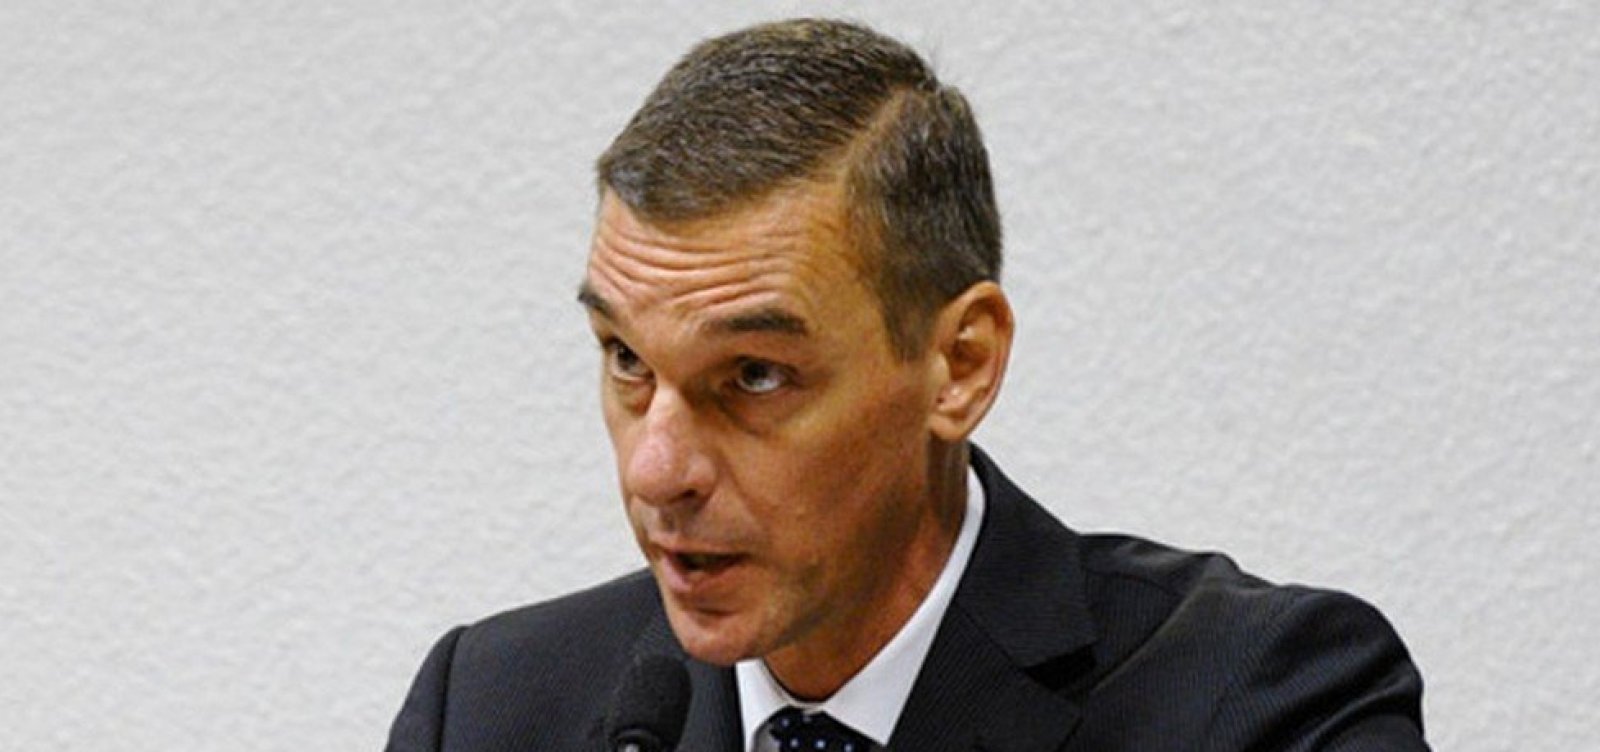 Executivo do HSBC é escolhido para presidência do Banco do Brasil